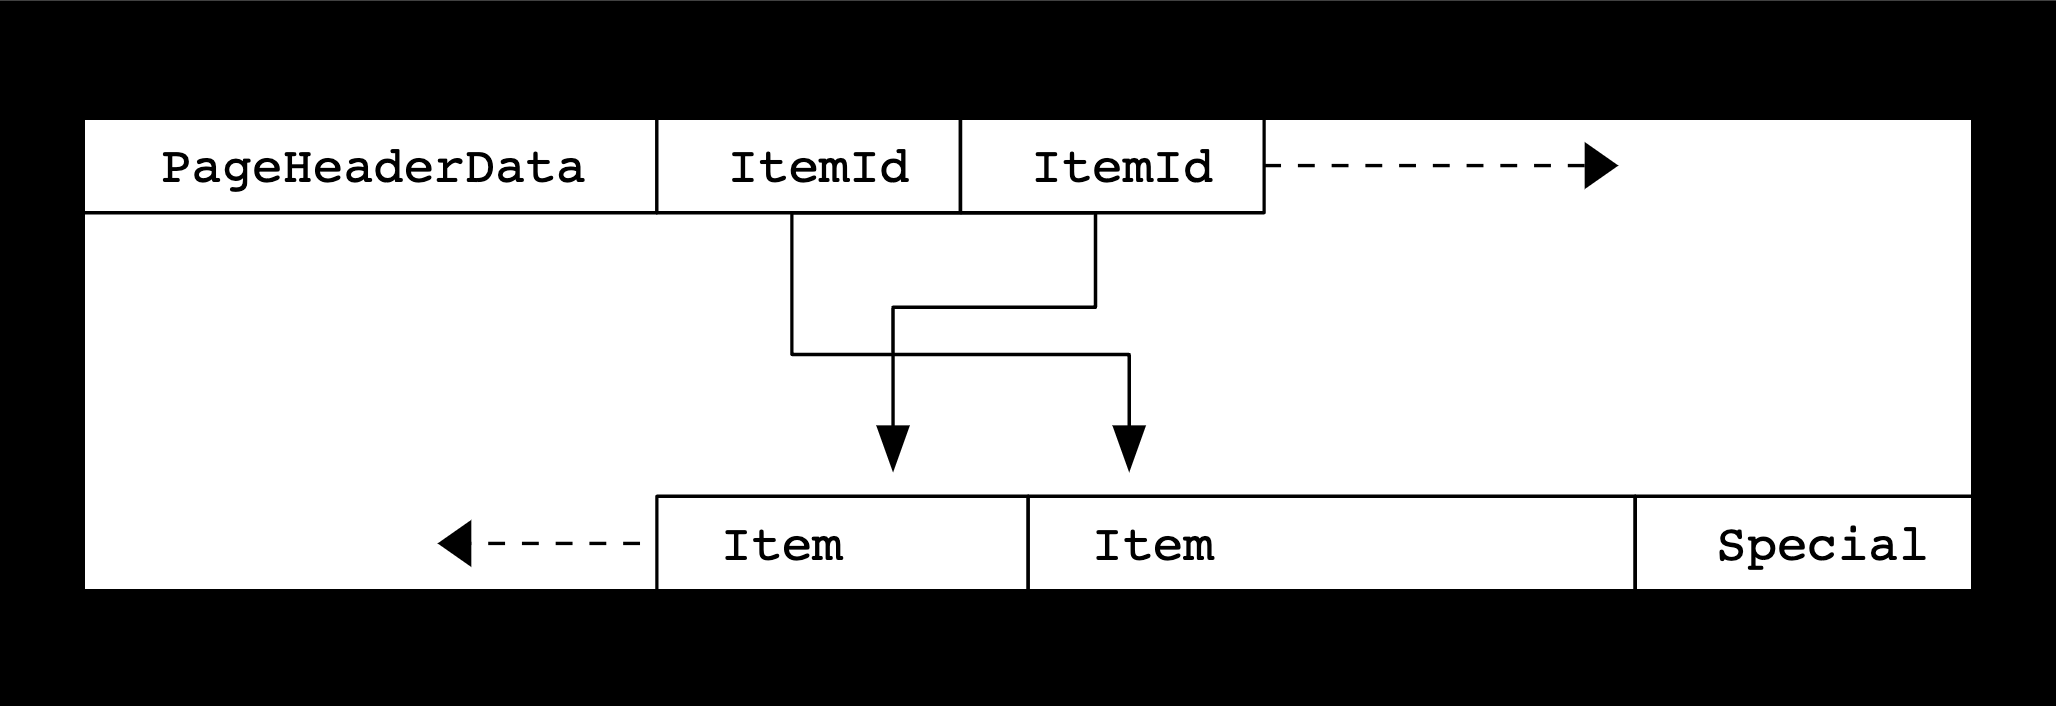 The PostgreSQL page layout model visualization